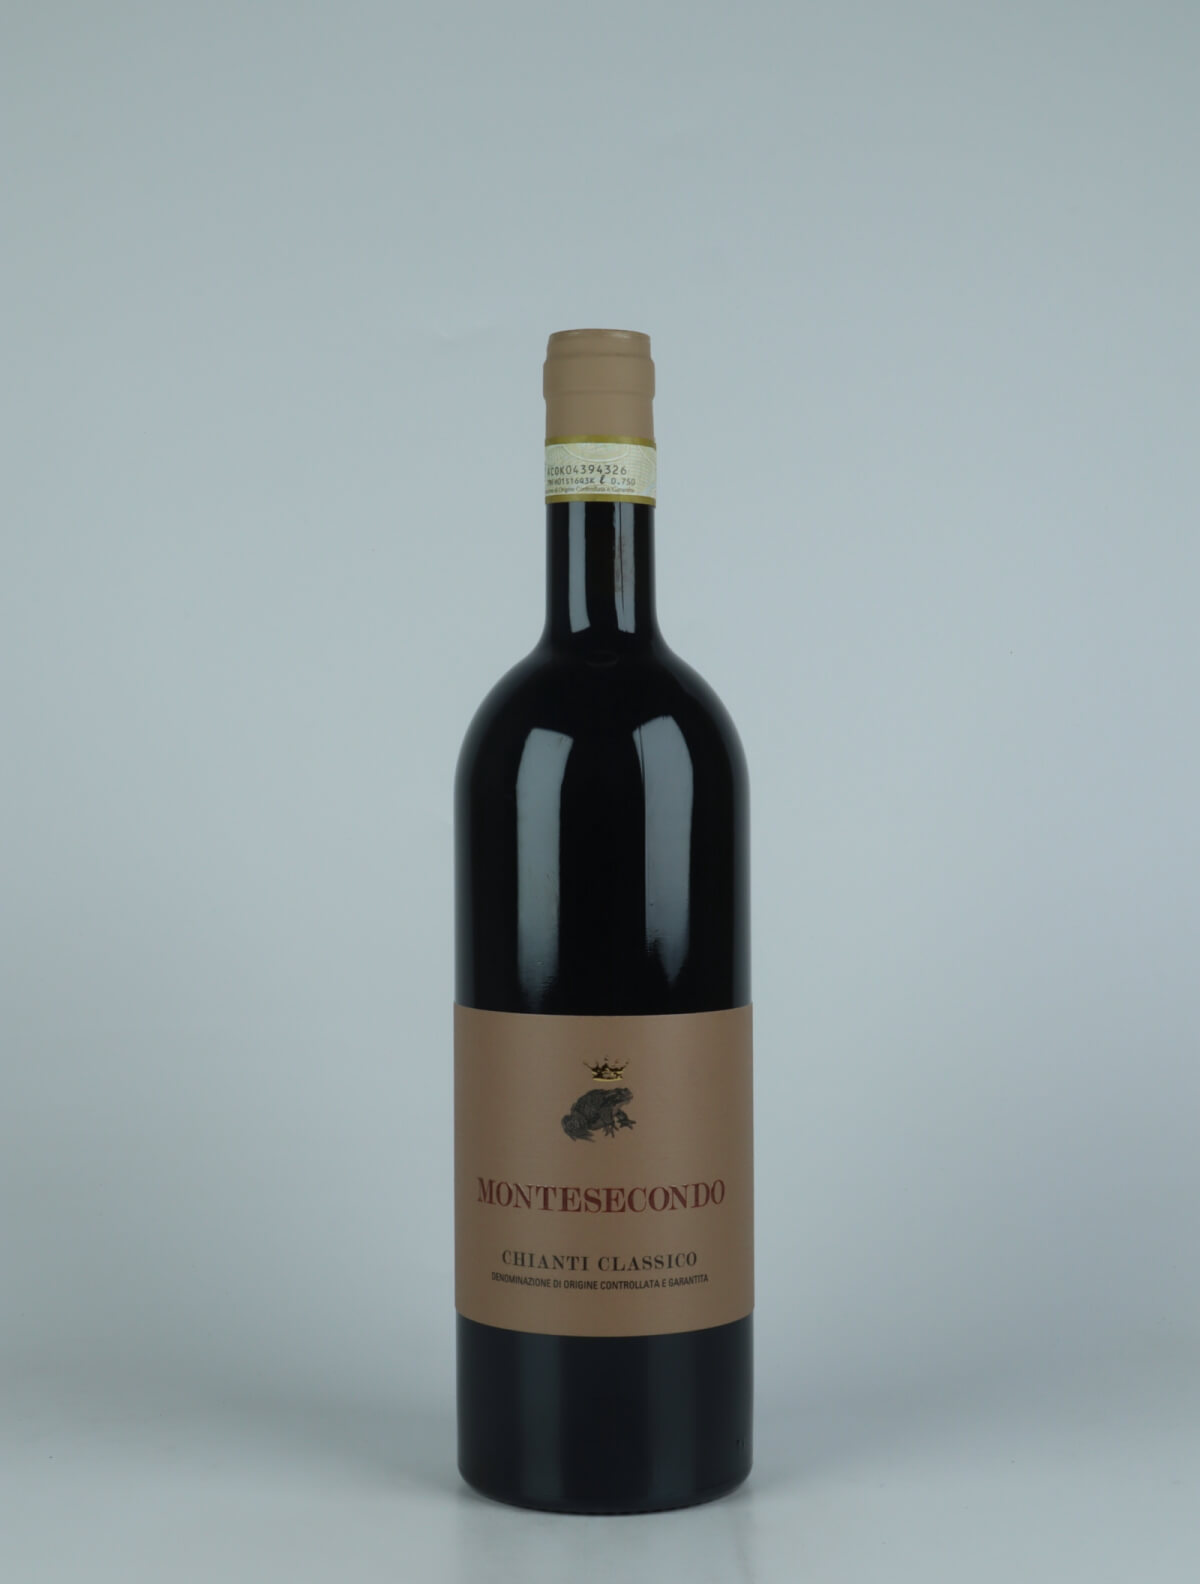 En flaske 2021 Chianti Classico Rødvin fra Montesecondo, Toscana i Italien